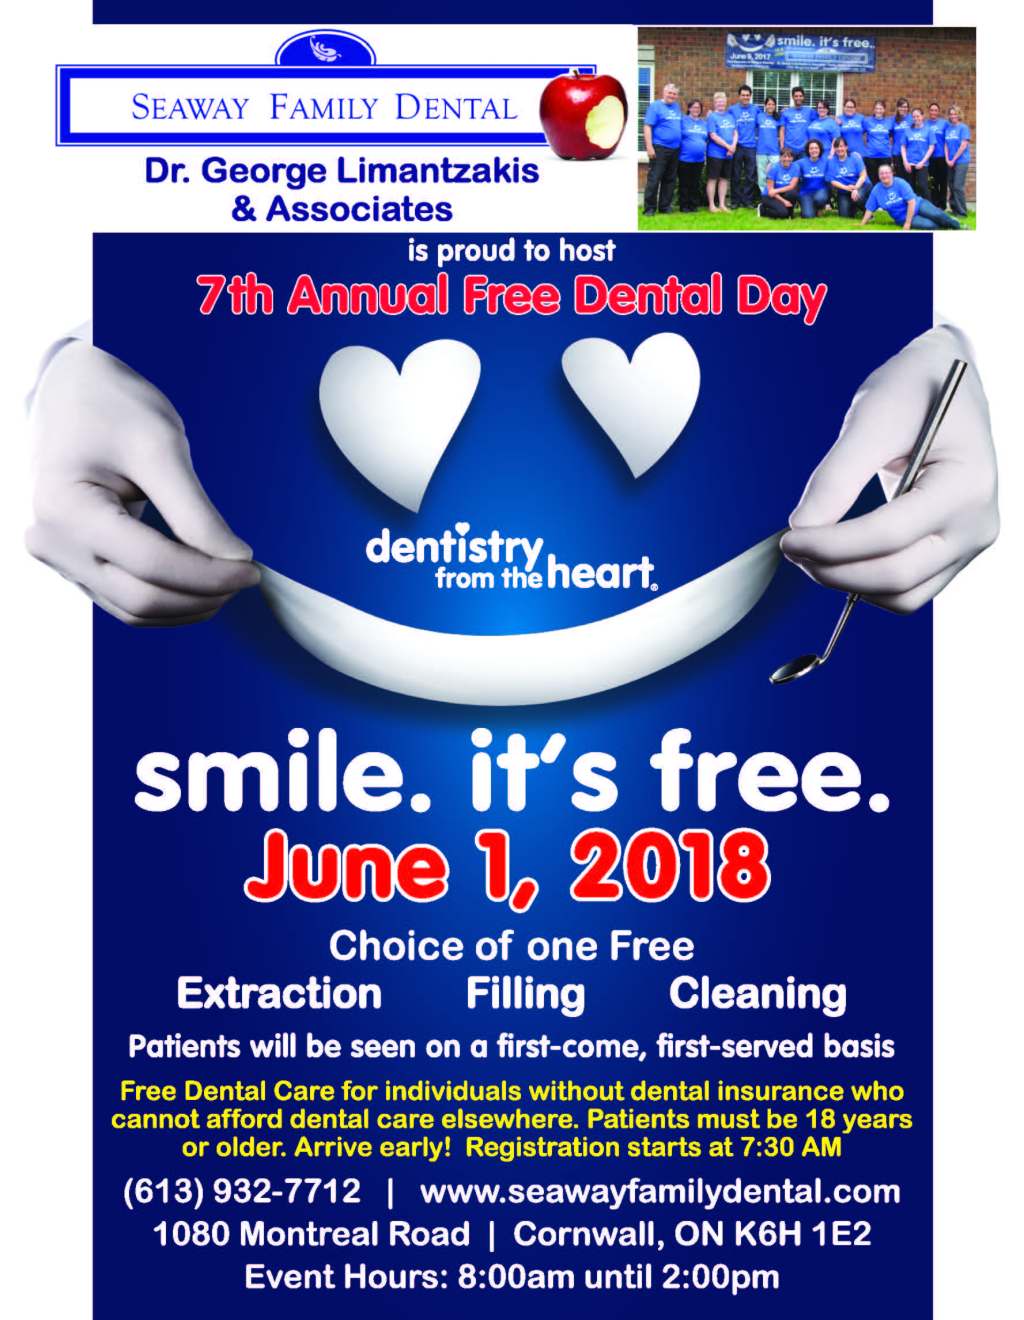 7th Annual Free Dental Day boom 101.9